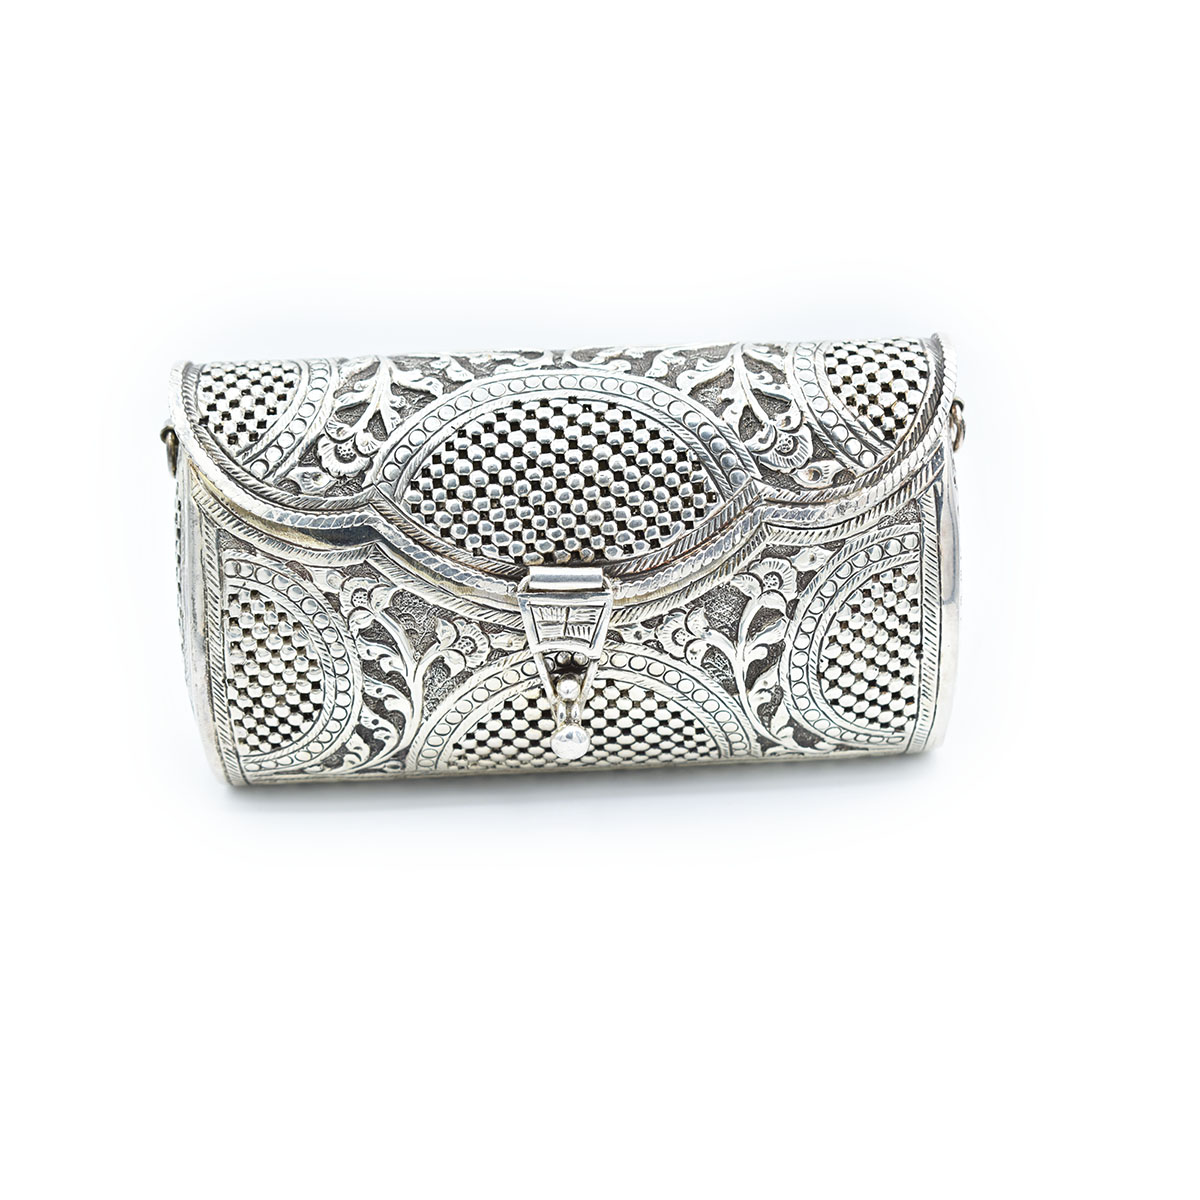 Cleeox Silver Women's Clutches & Evening bags | ALDO US